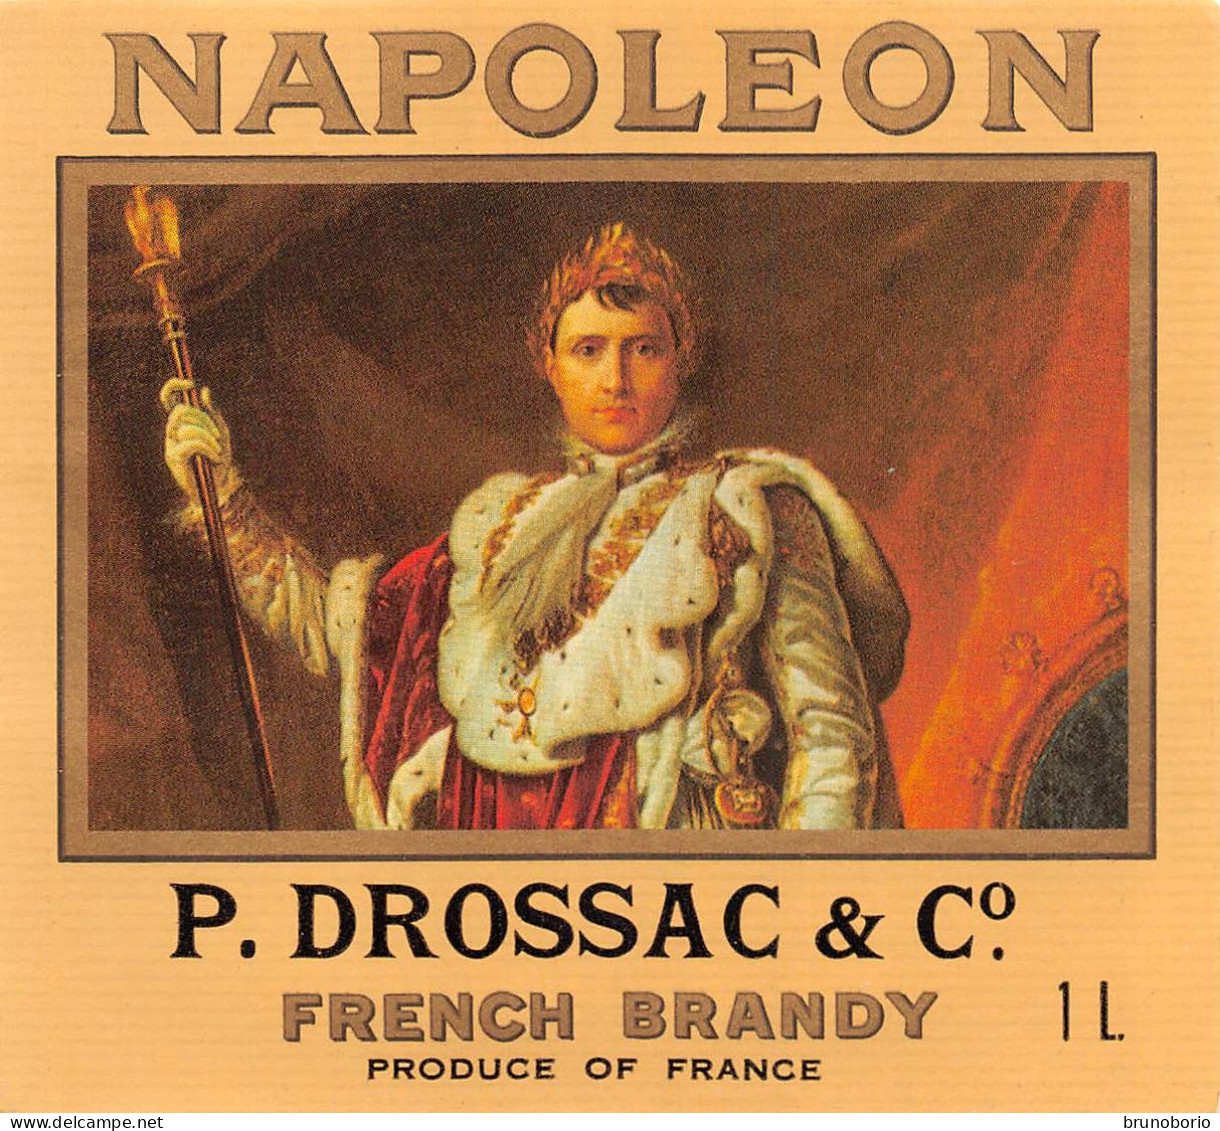 00045 "NAPOLEON - T. DROSSAC & C°. - FRENCH BRANDY - PRODUCE OF FRANCE" ETICH. ORIG. ANIMATA - Alkohole & Spirituosen